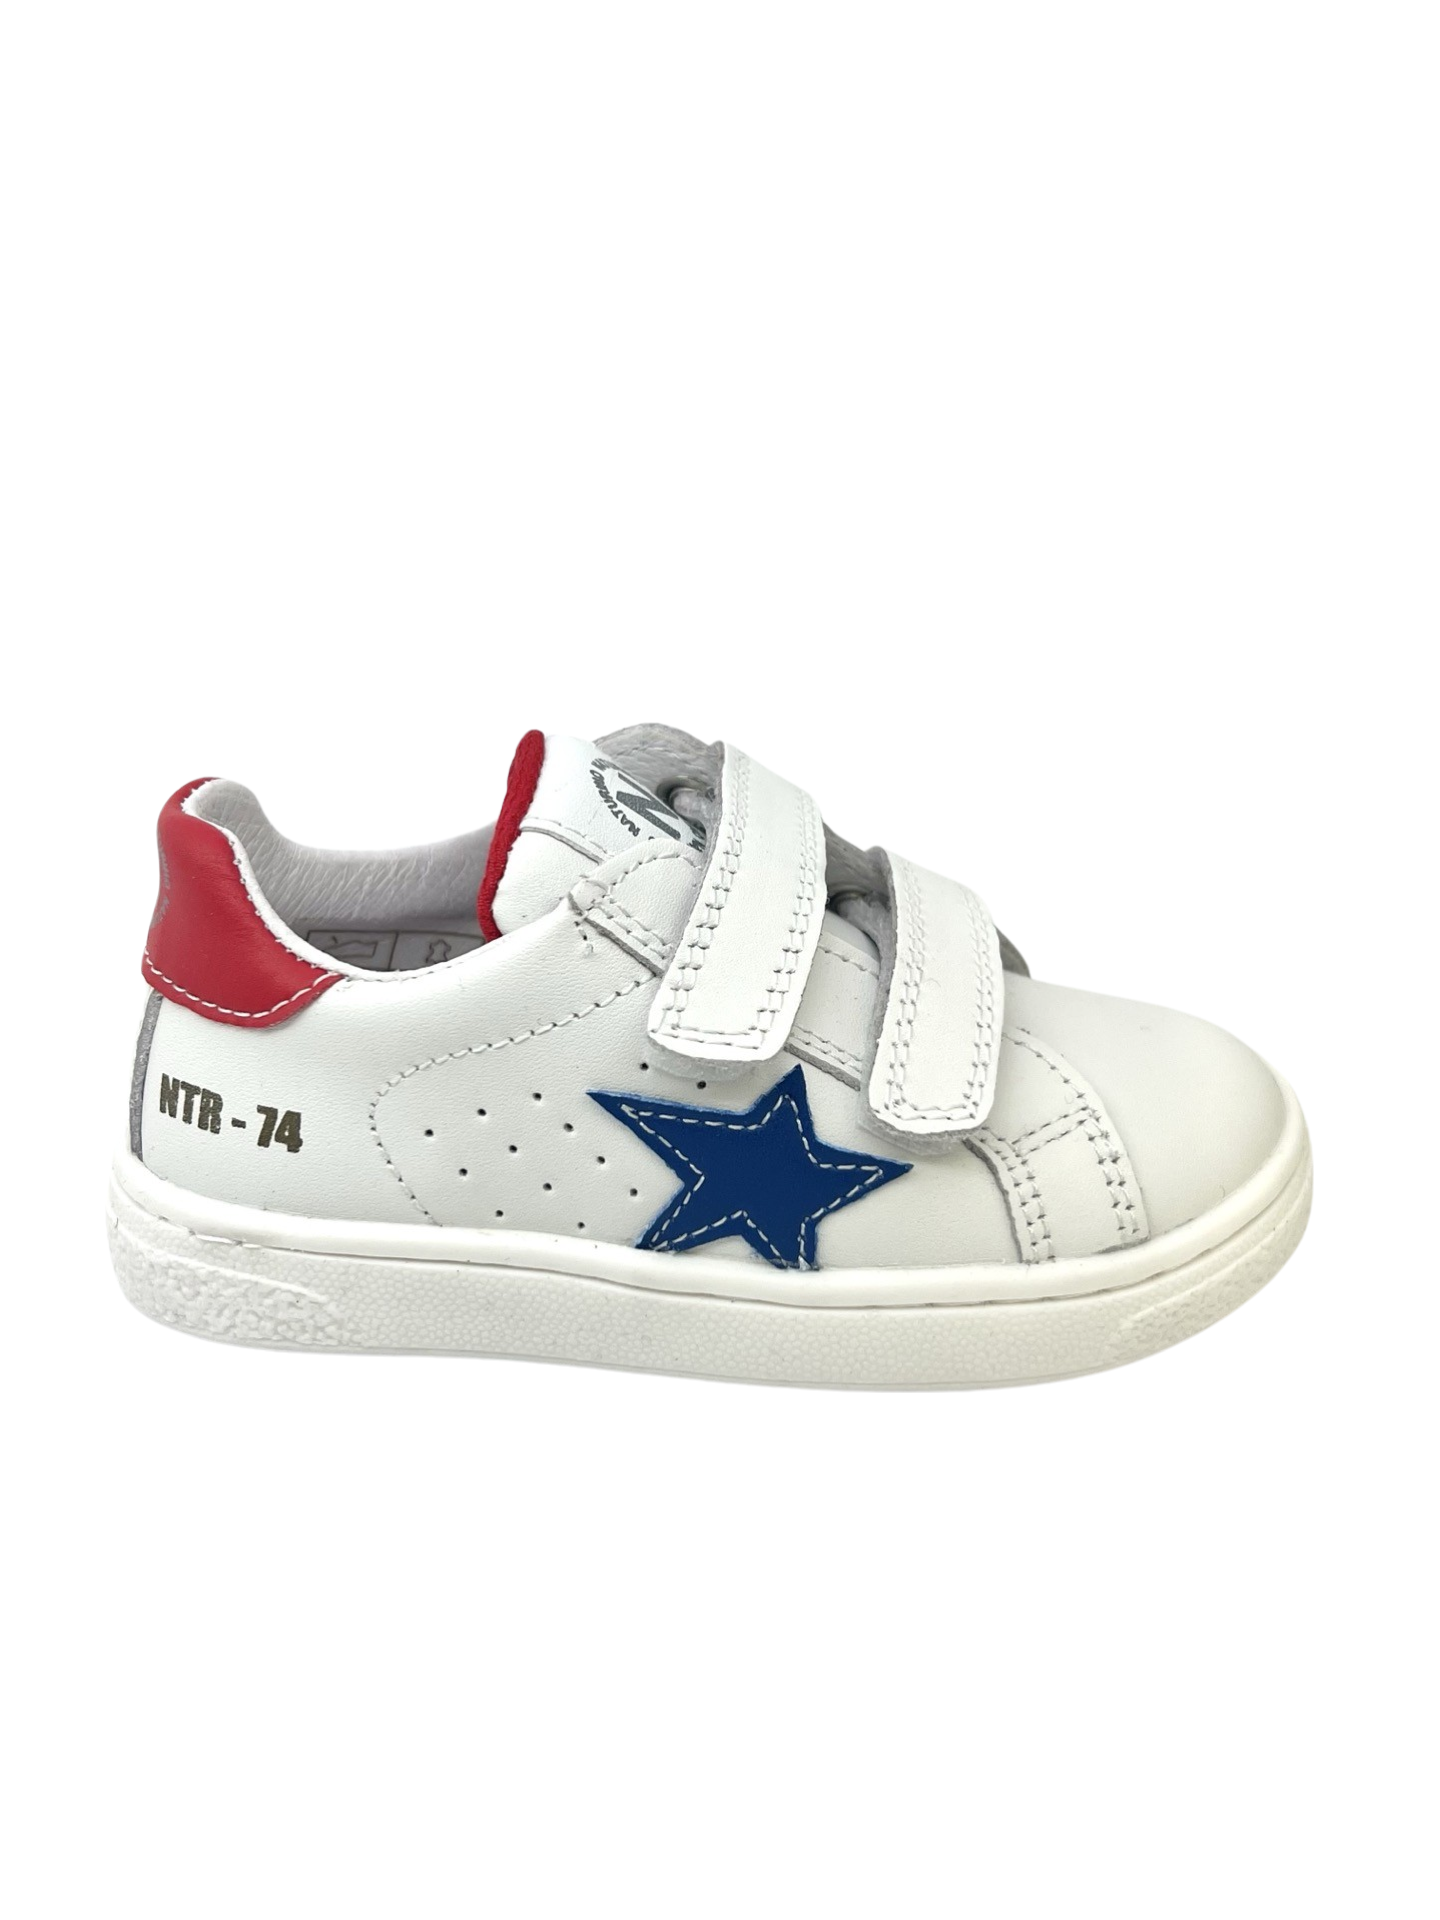 Naturino White Double Velcro Sneaker With Blue Star - Pinn